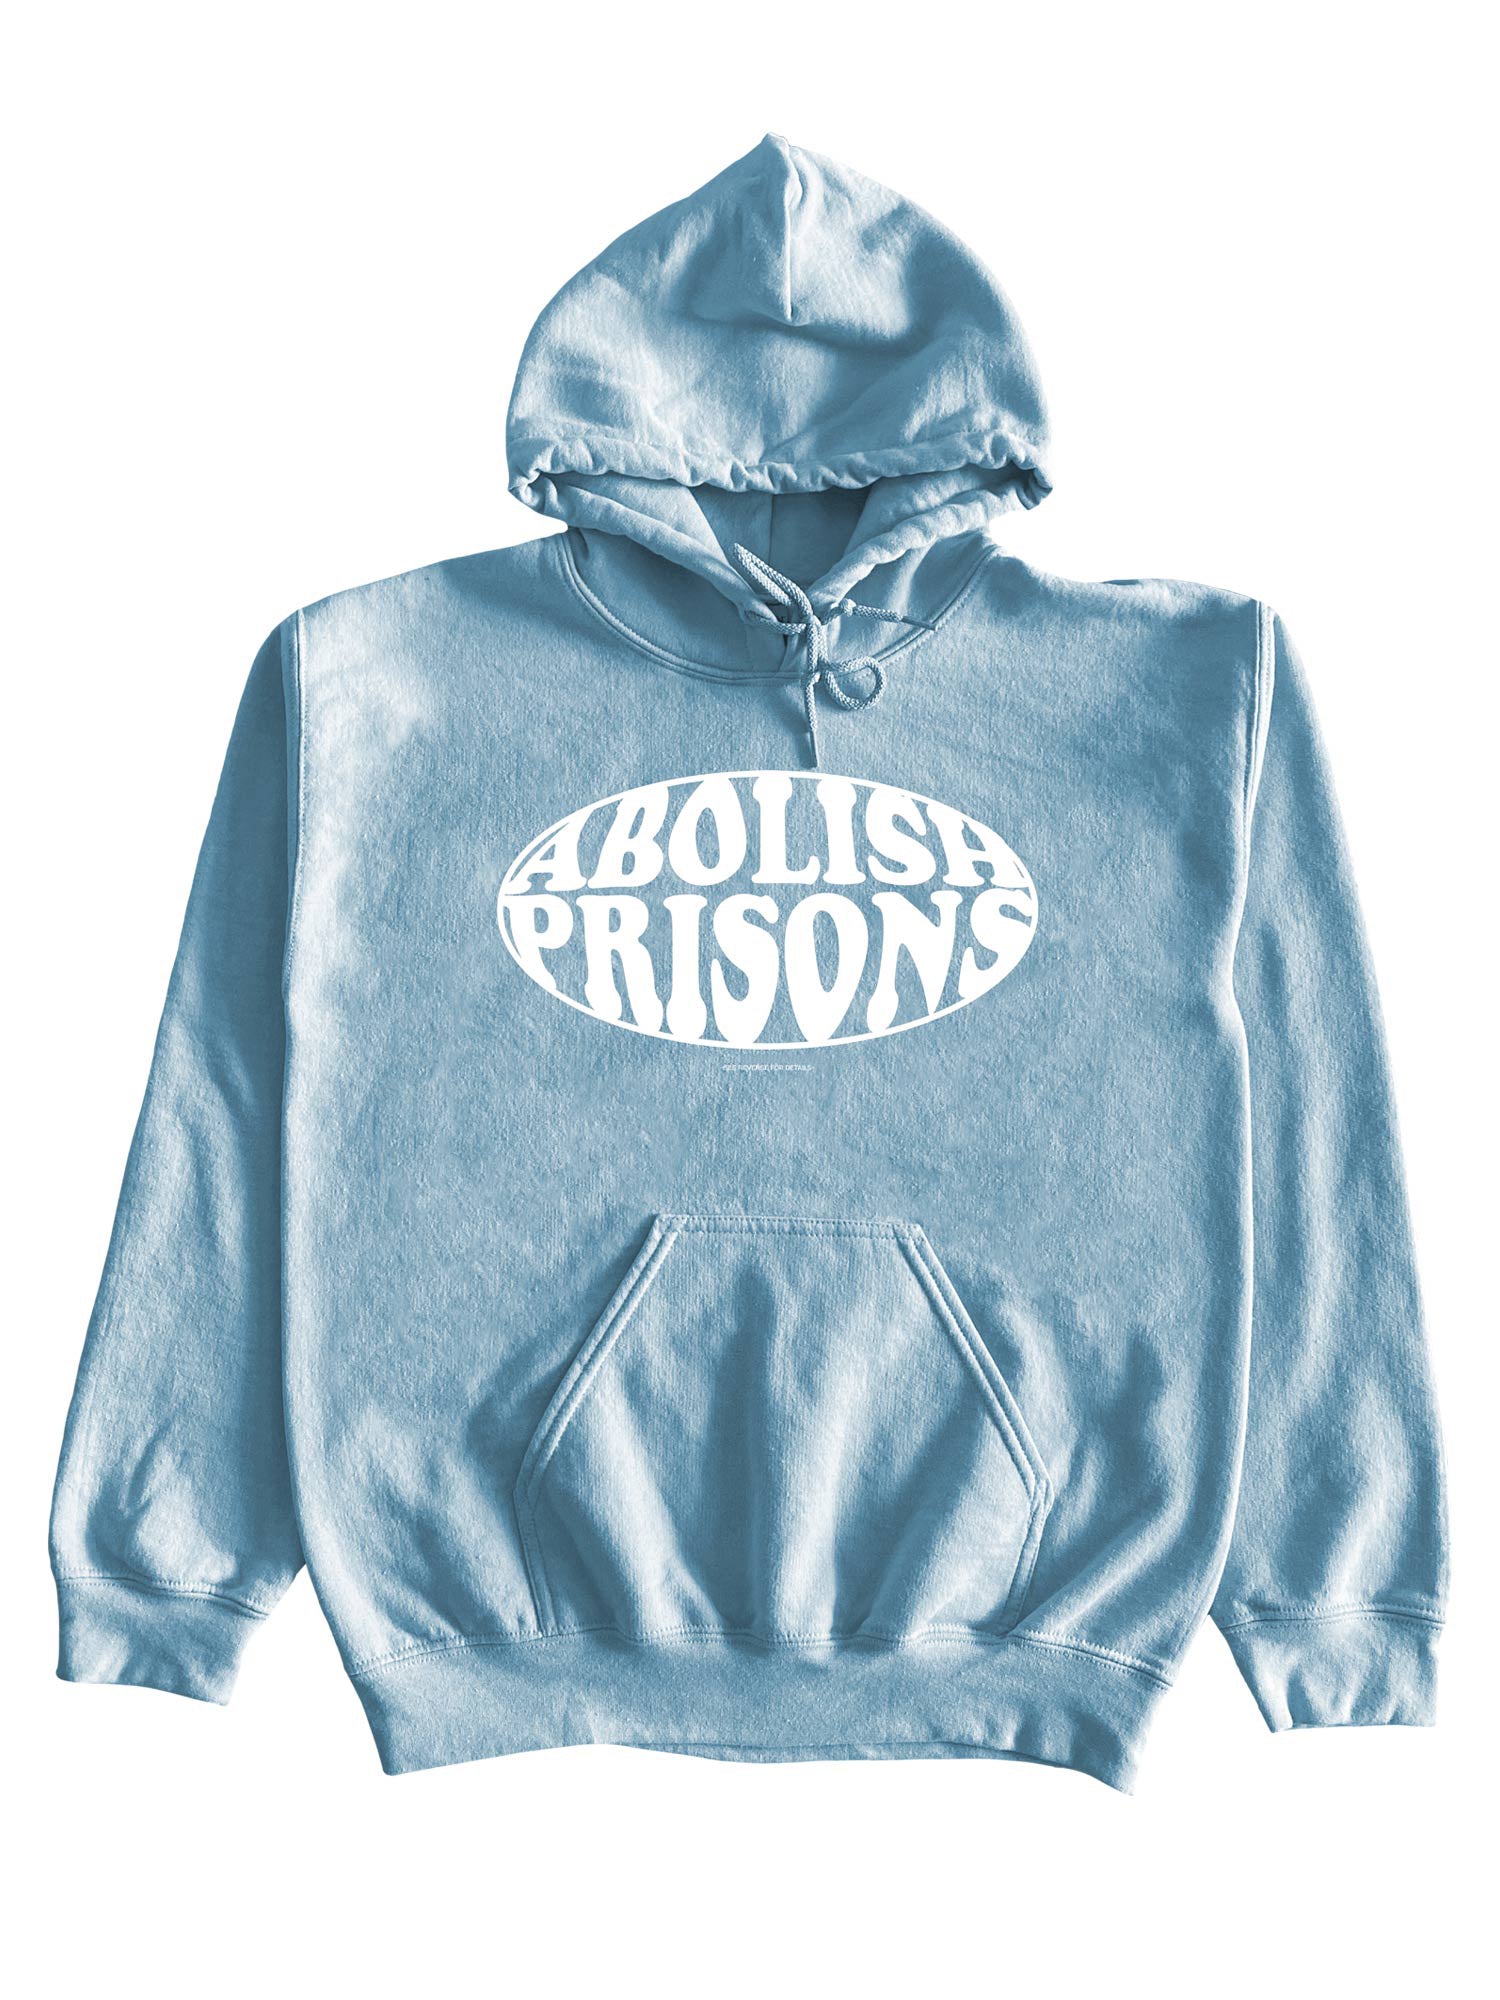 Abolish Prisons Hoodie